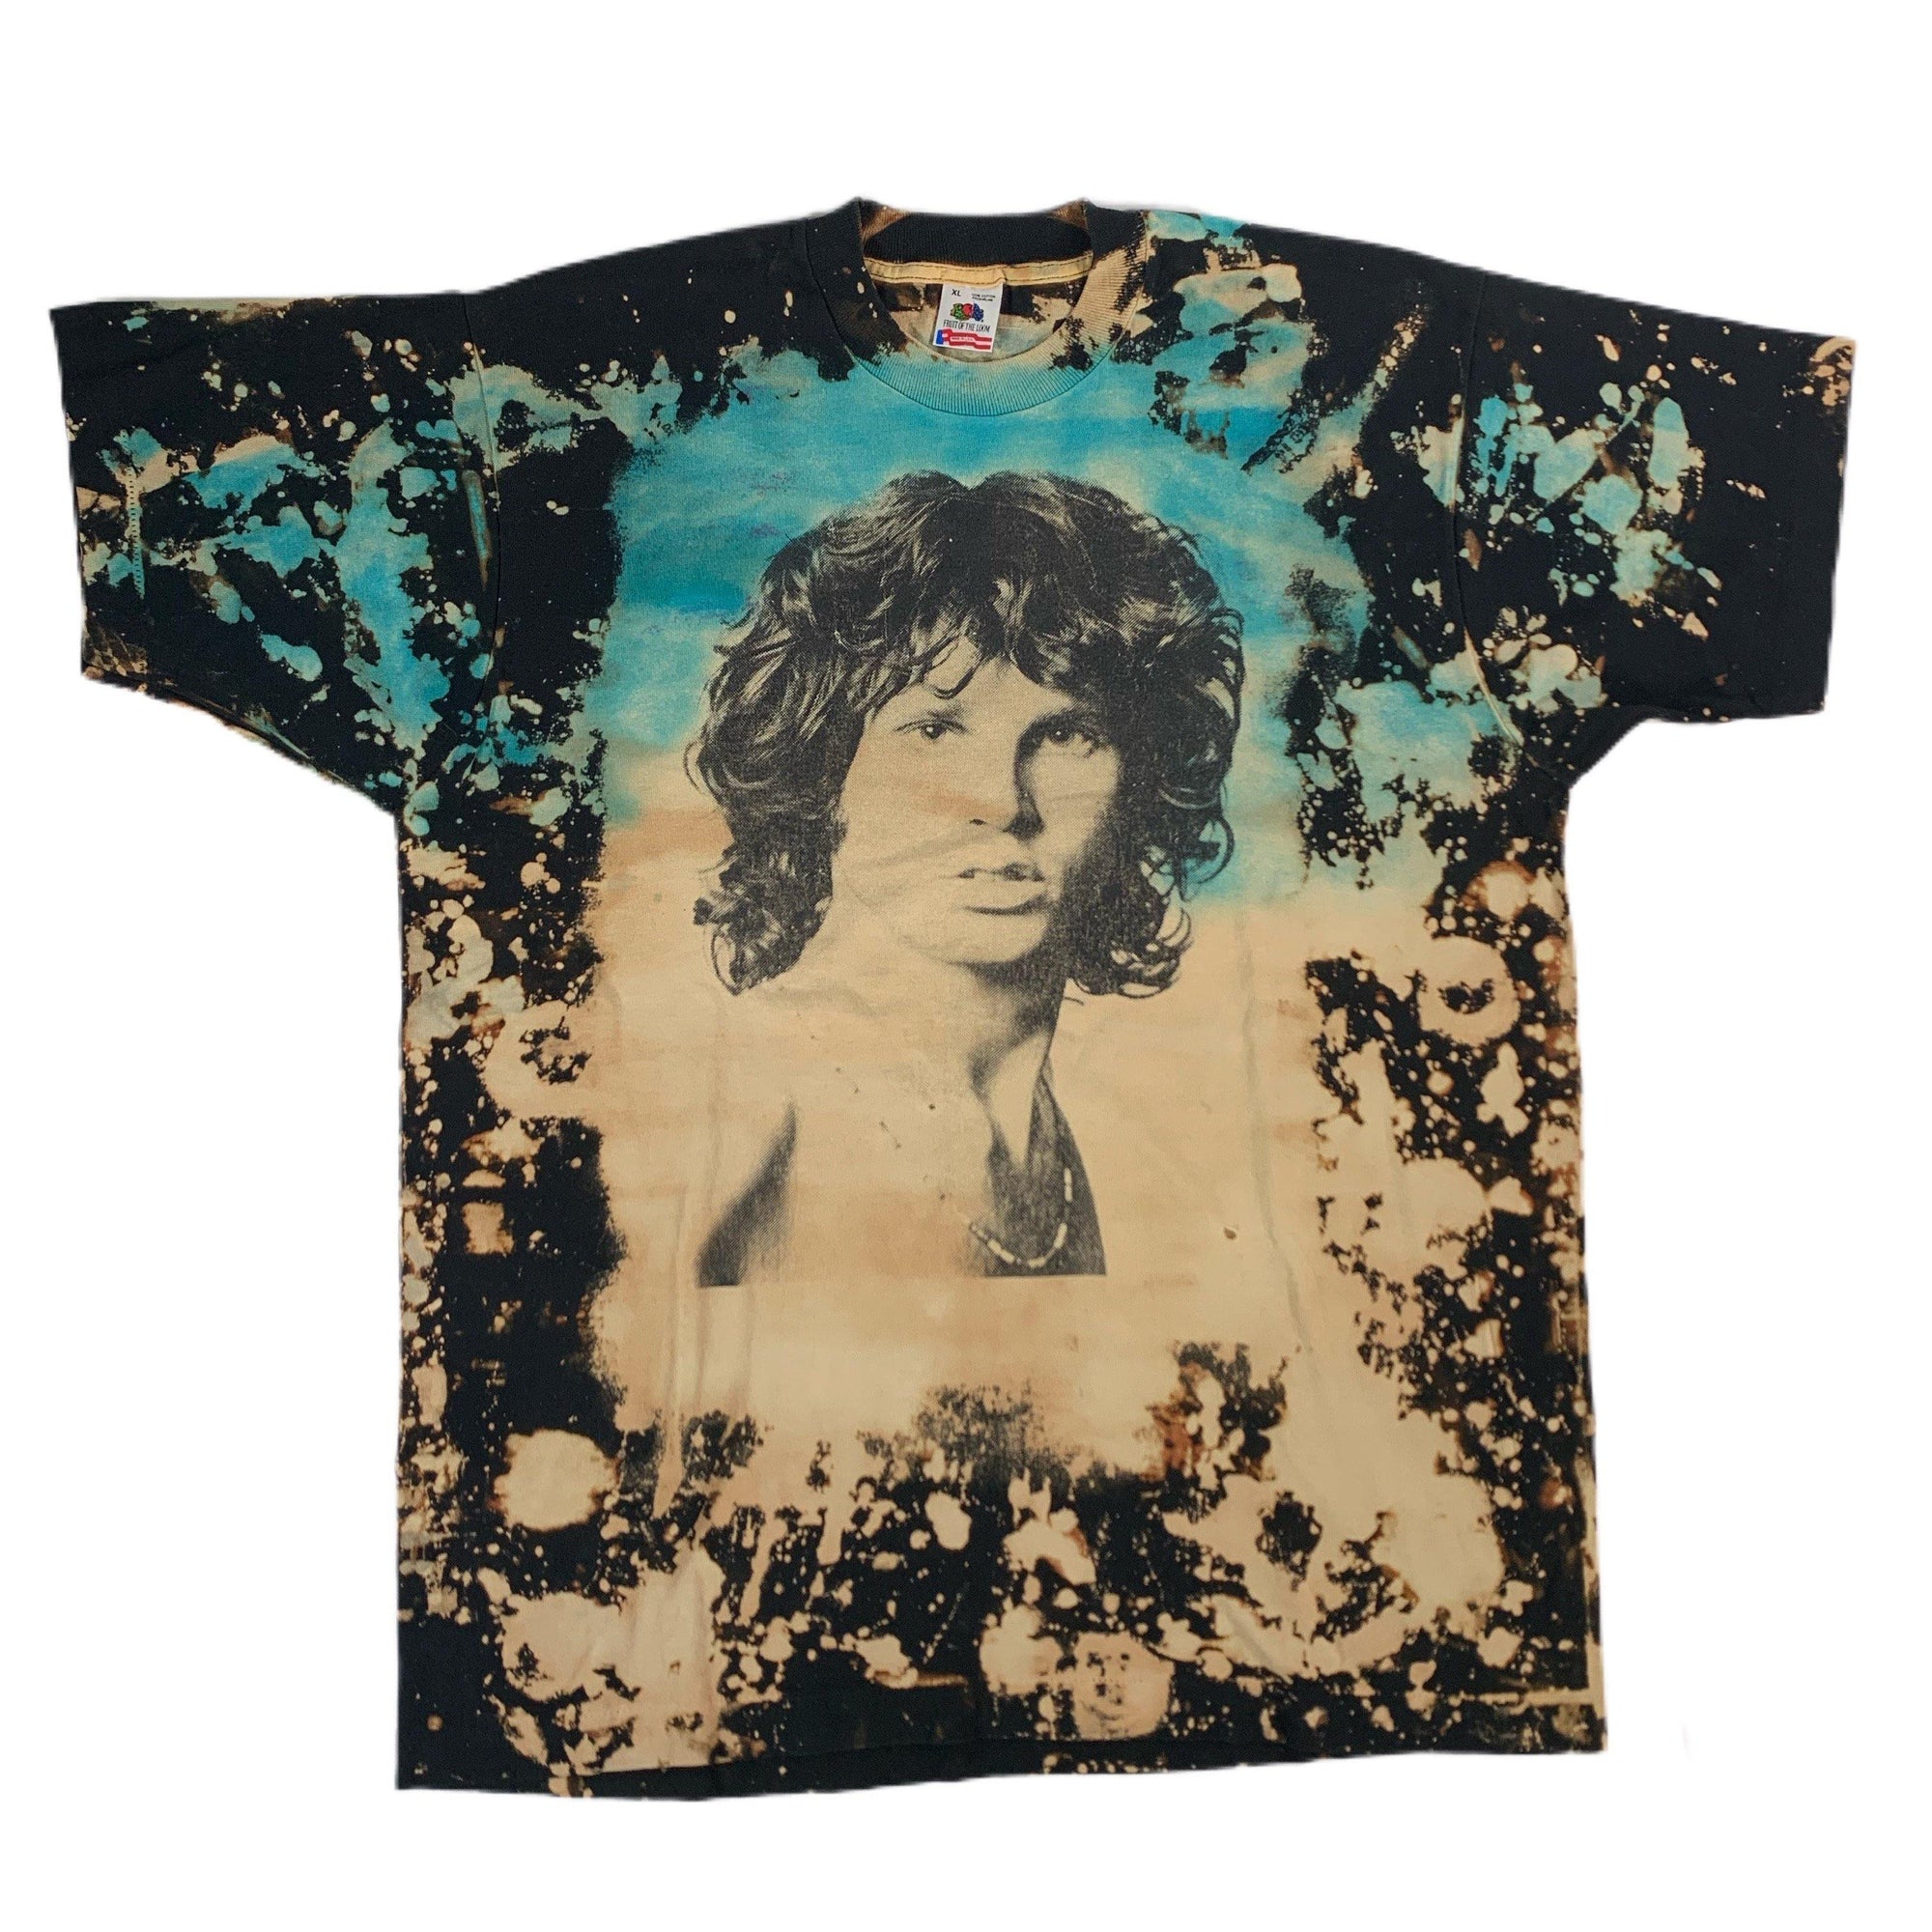 Vintage The Doors "Jim Morrison" T-Shirt - jointcustodydc